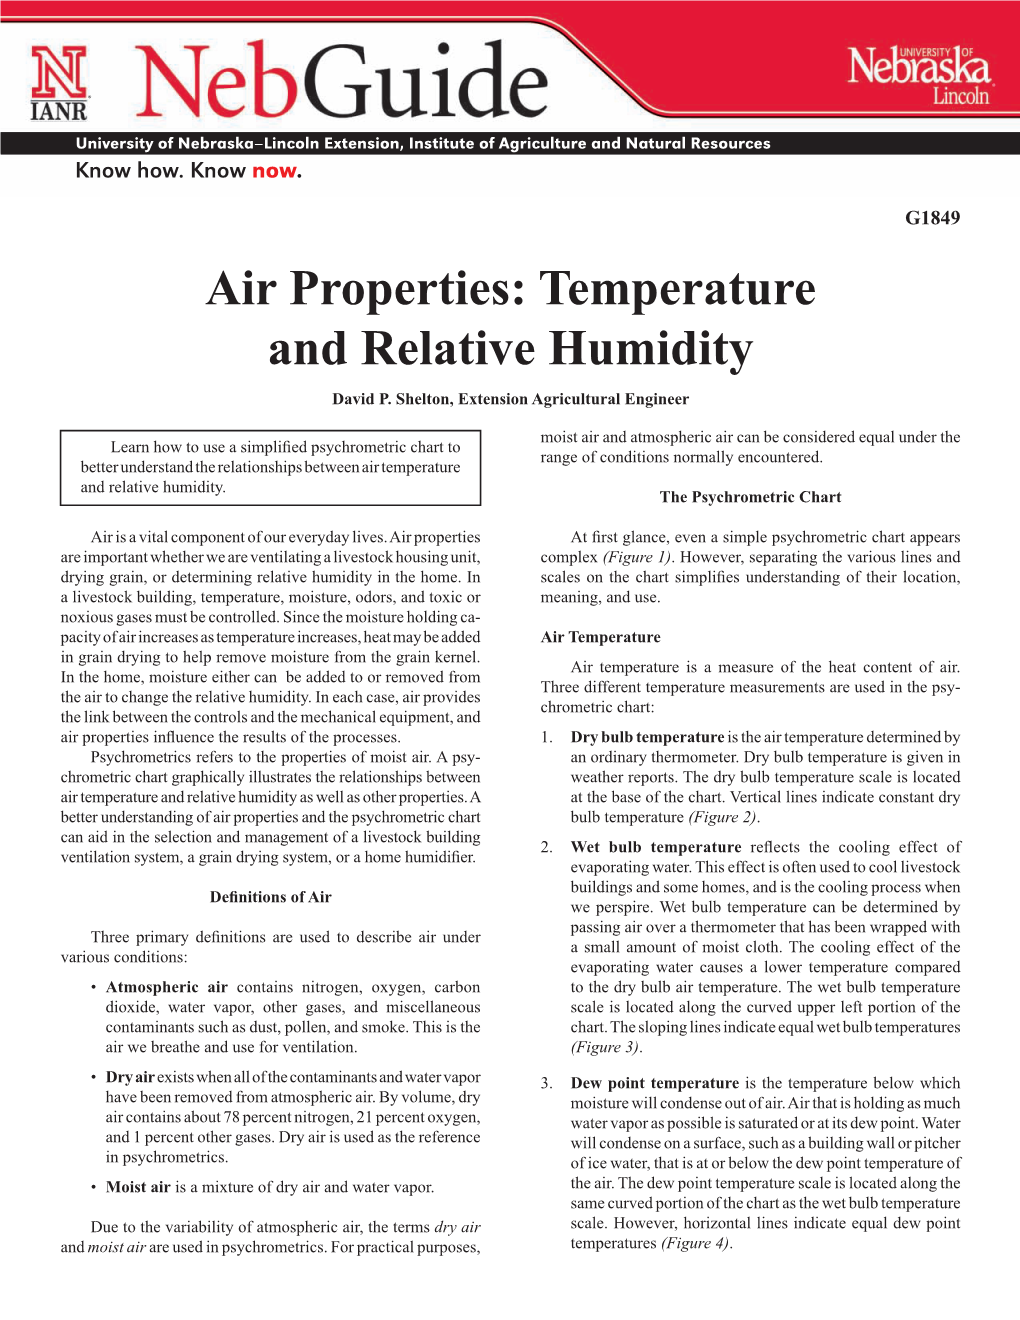 Air Properties: Temperature and Relative Humidity David P